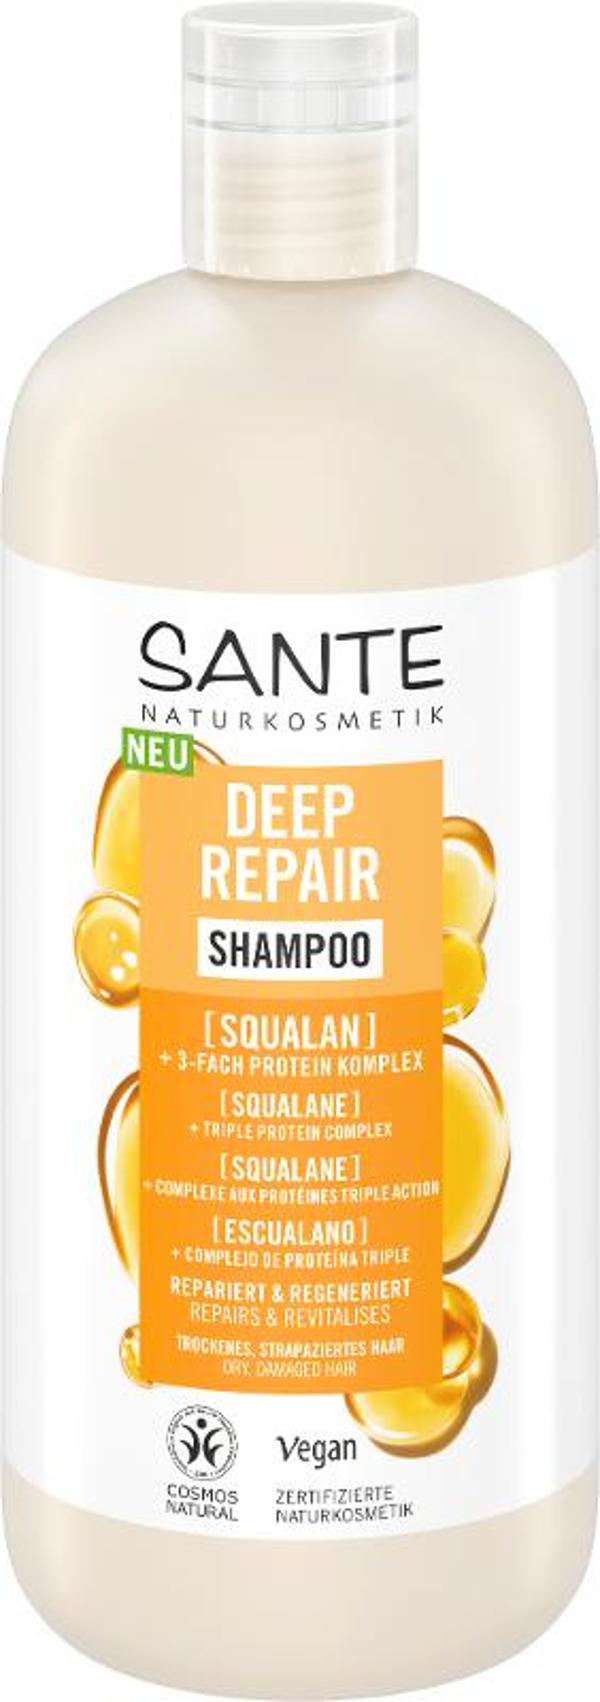 Produktfoto zu Deep Repair Shampoo Squalan 500ml Sante